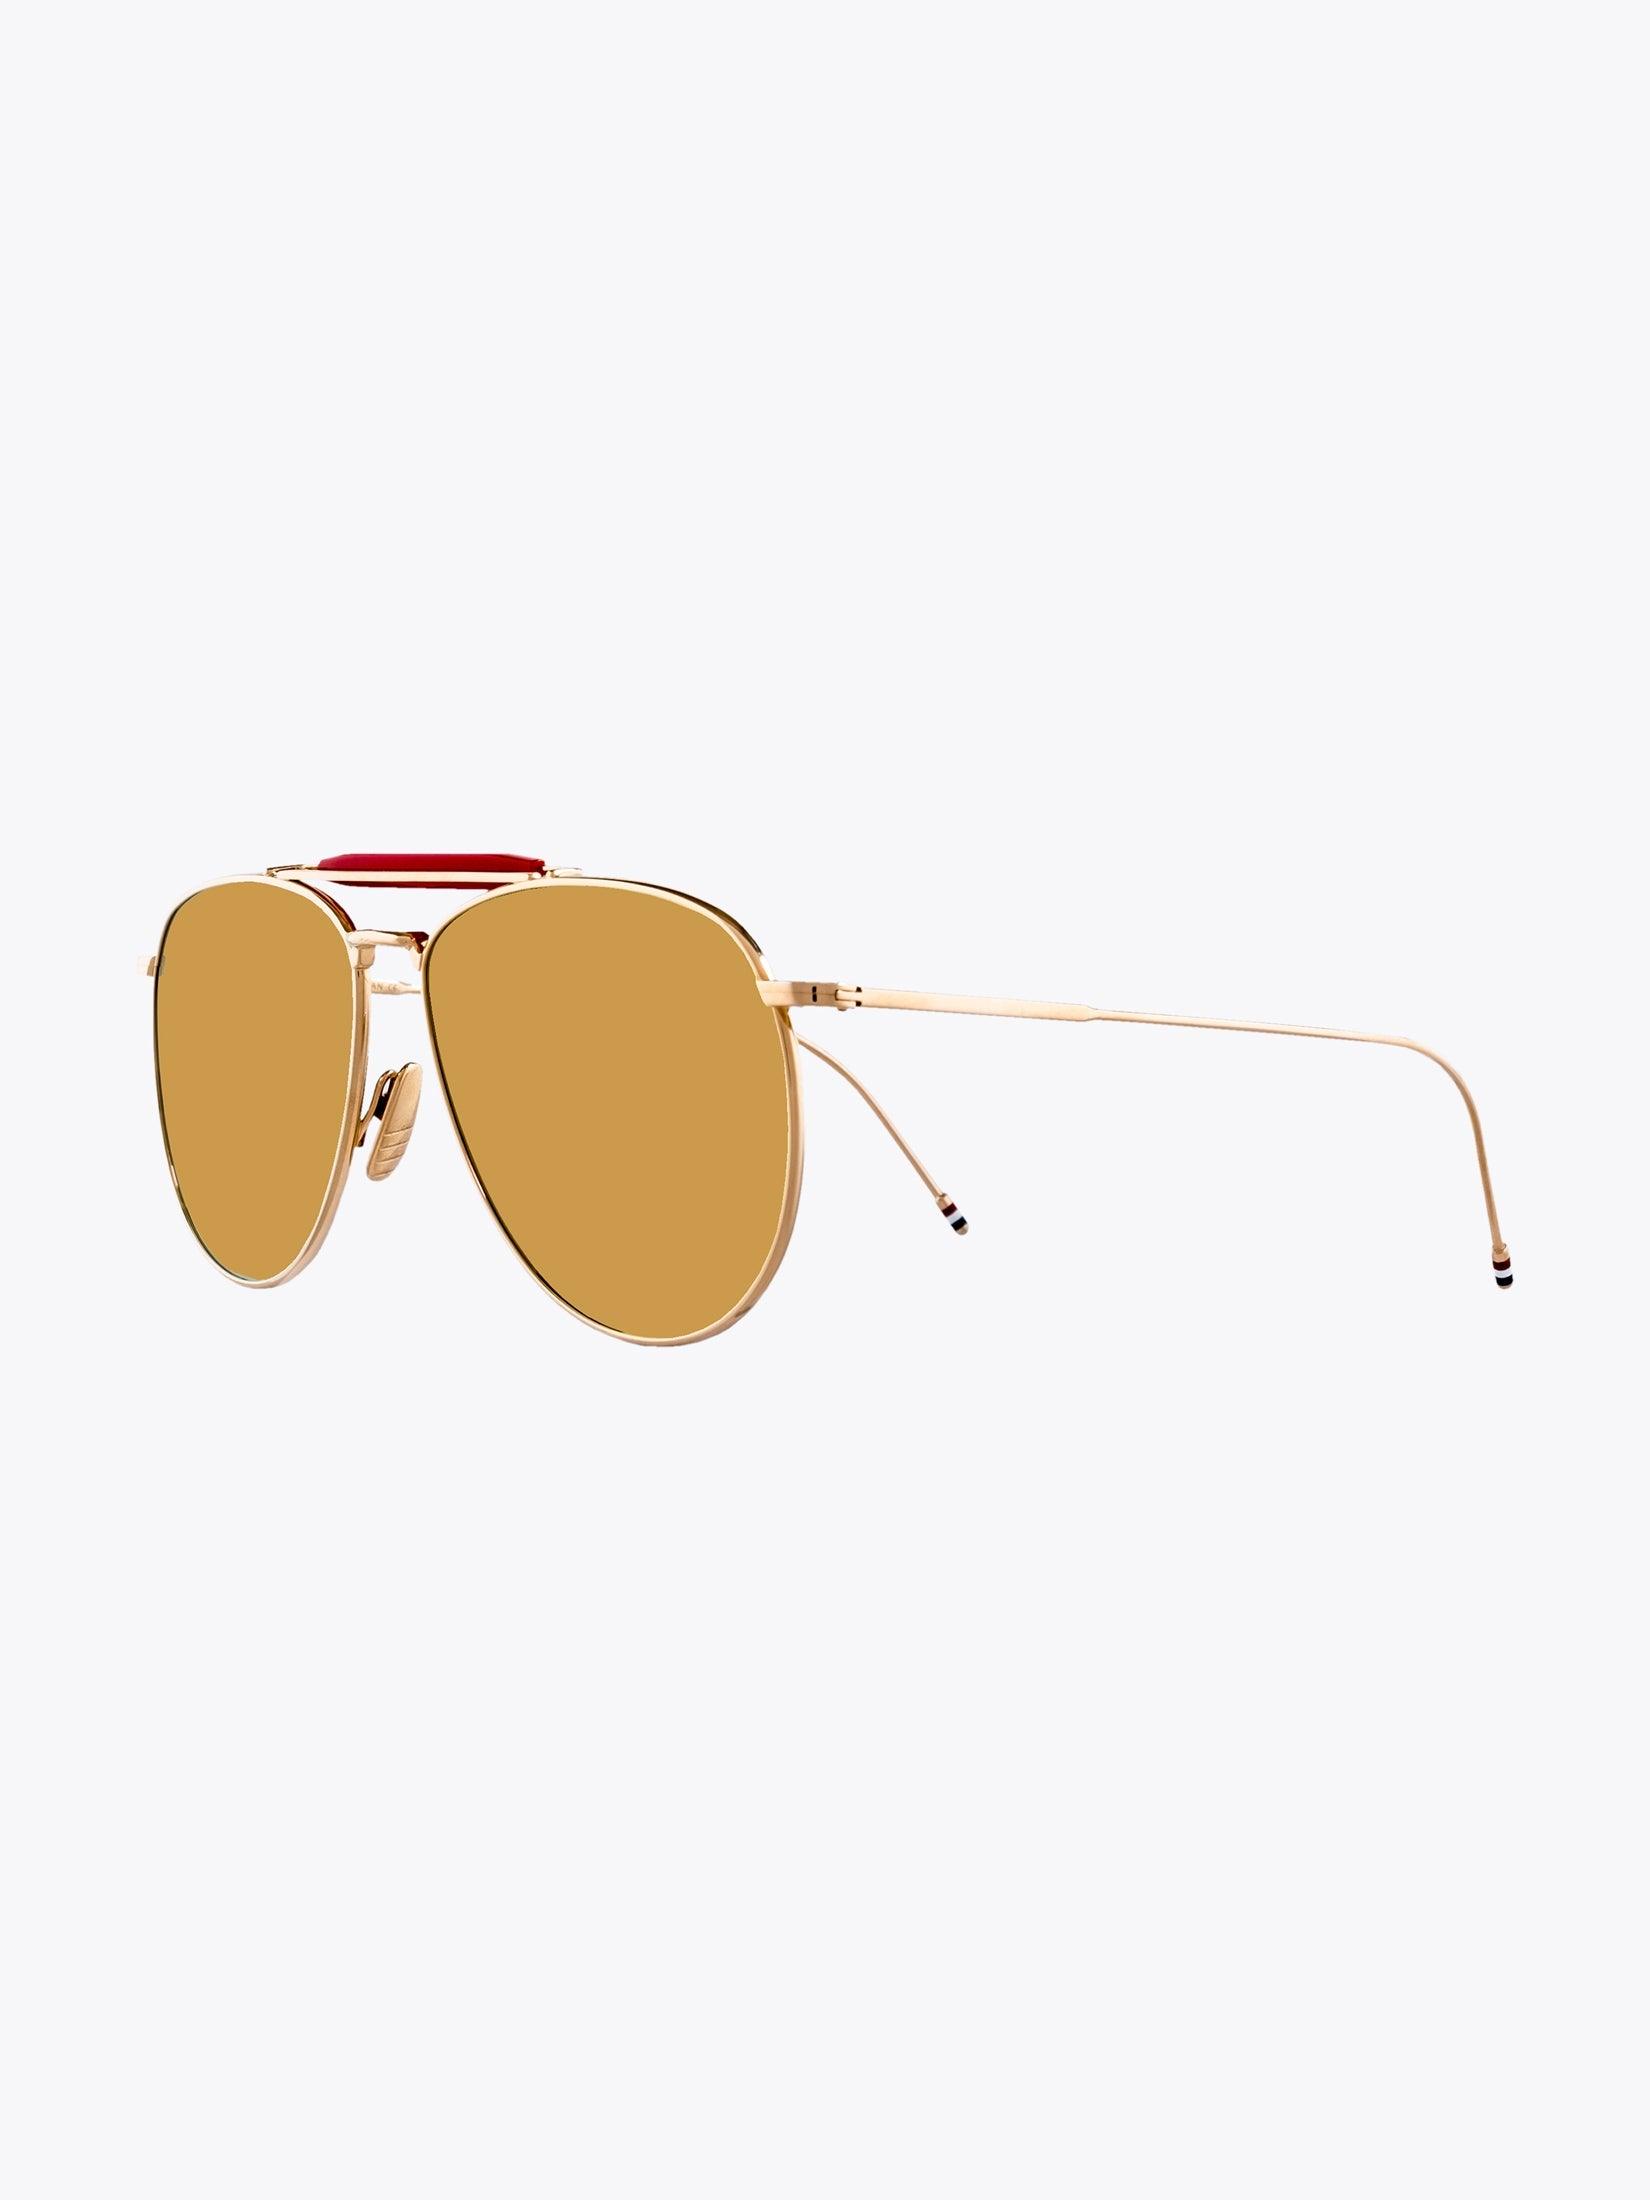 Thom Browne TB-015 Gold Sunglasses